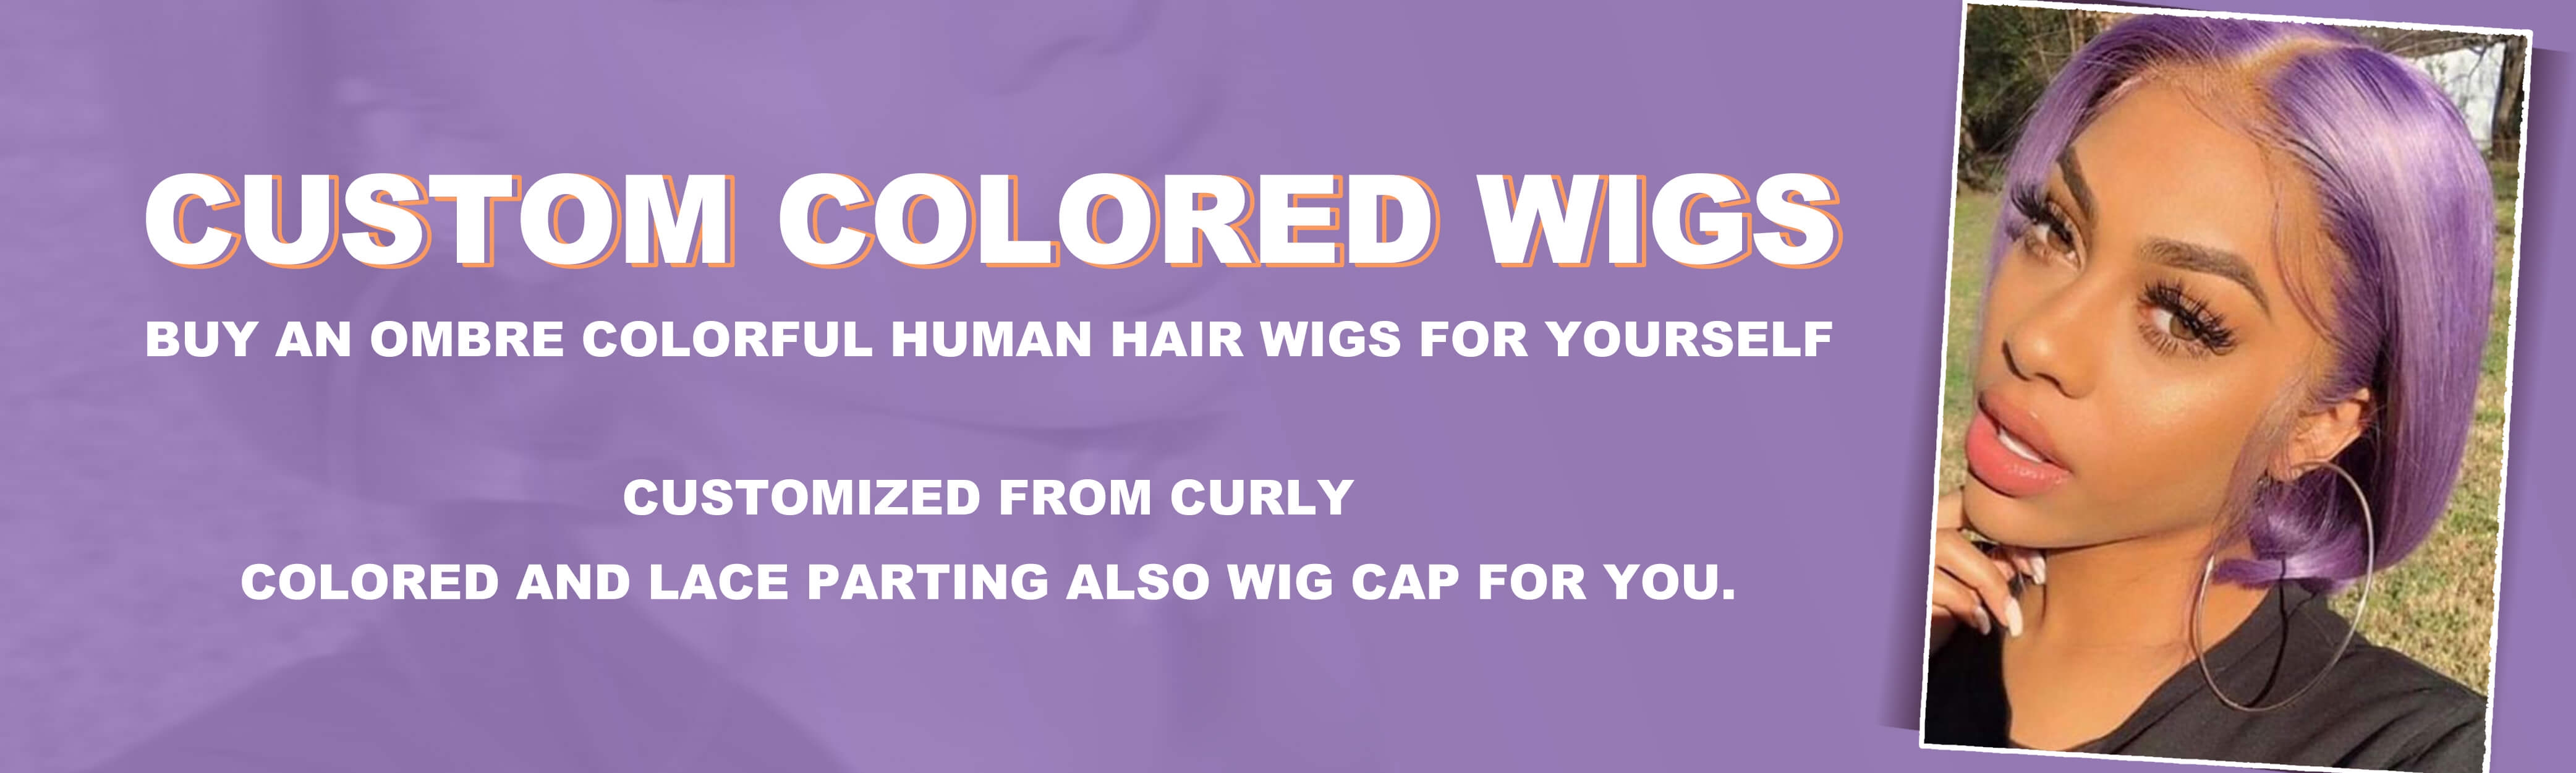 Custom Colored Wigs